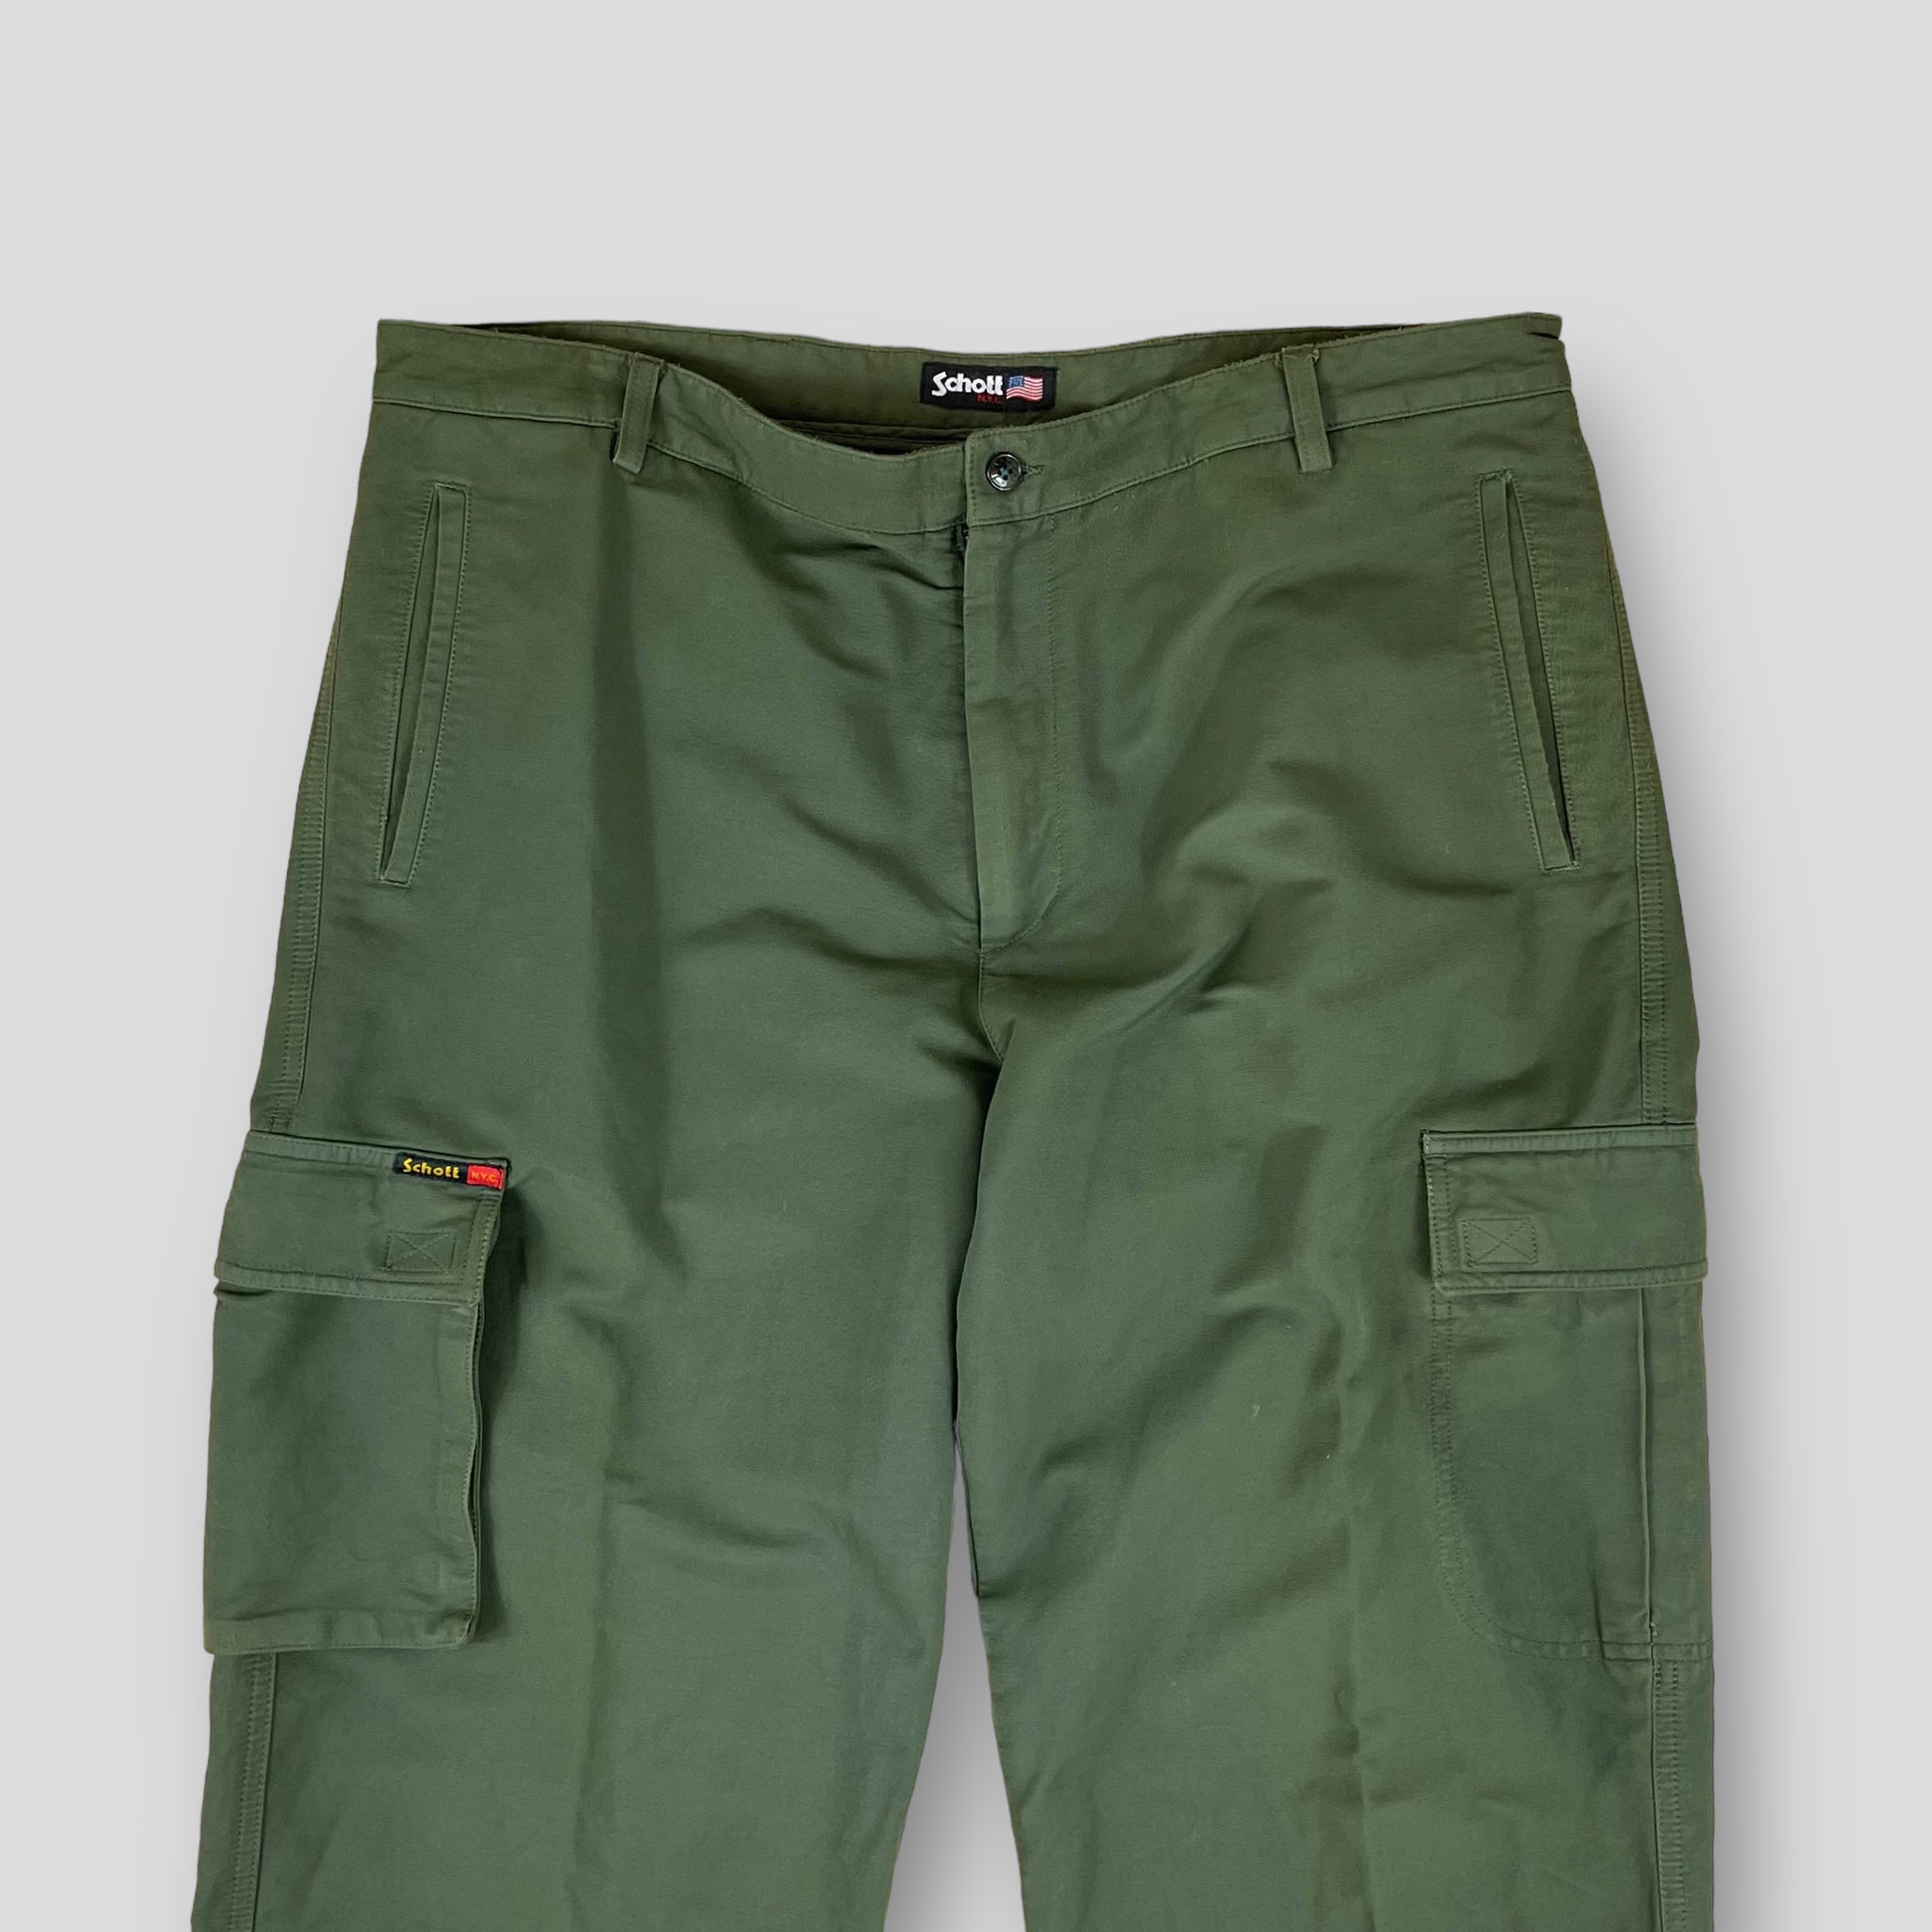 Schott cargo trousers